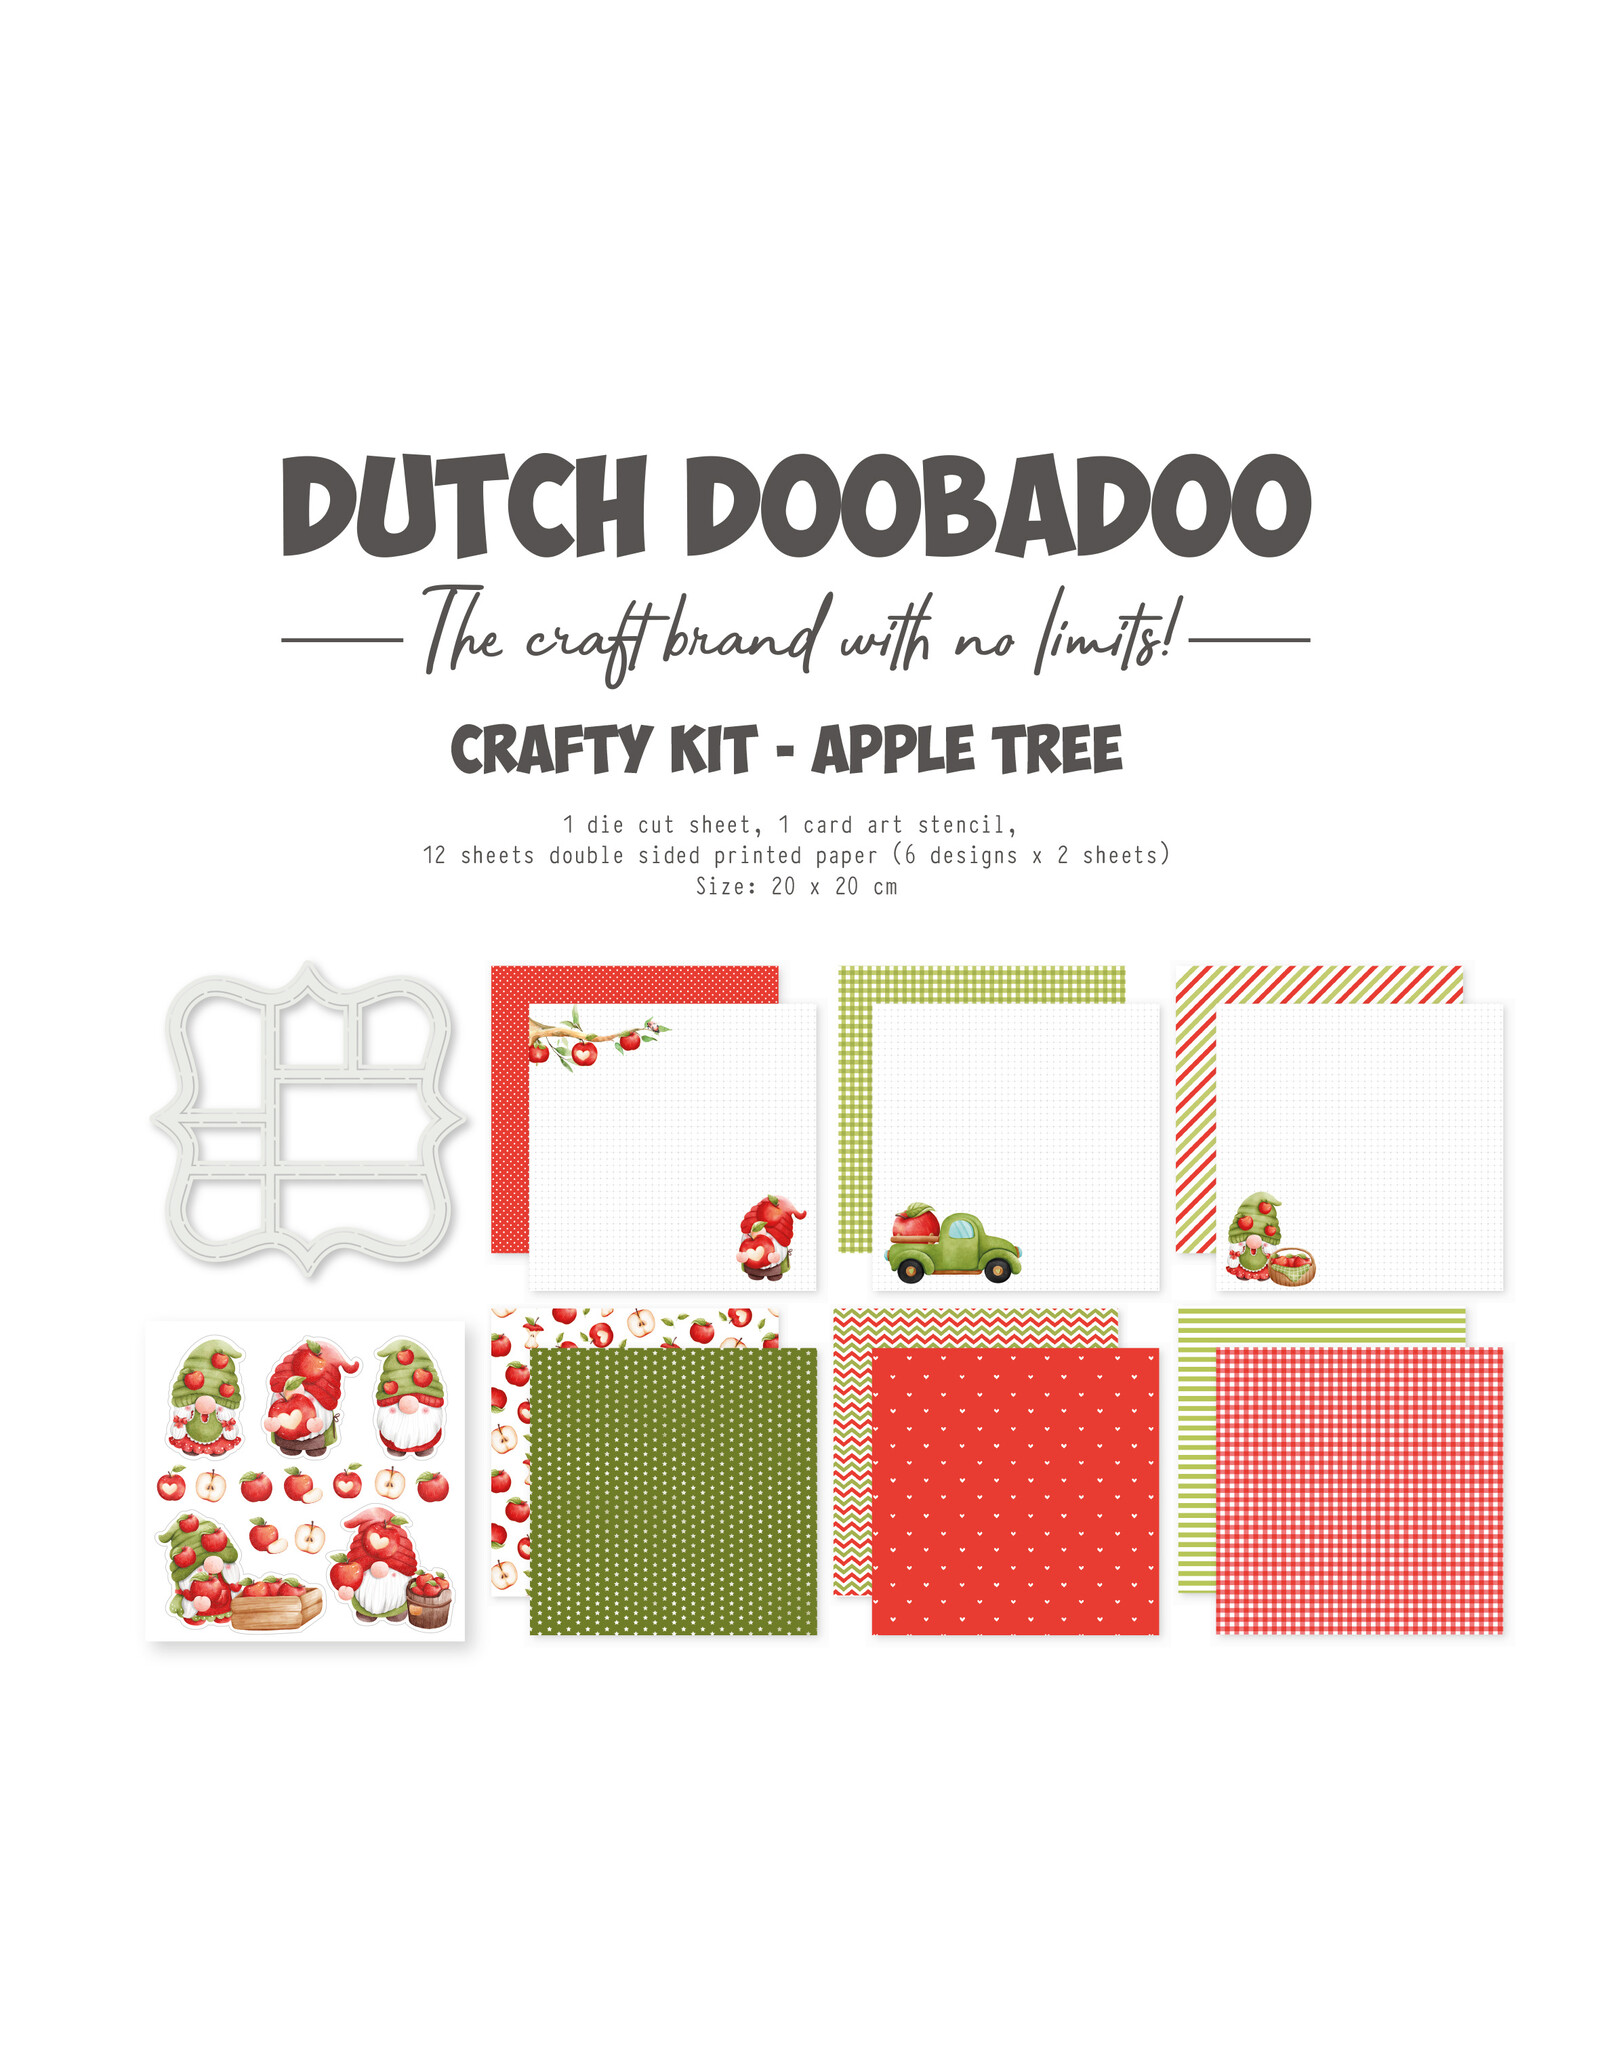 Dutch Doobadoo DDBD Crafty Kit Apple tree 20x20cm